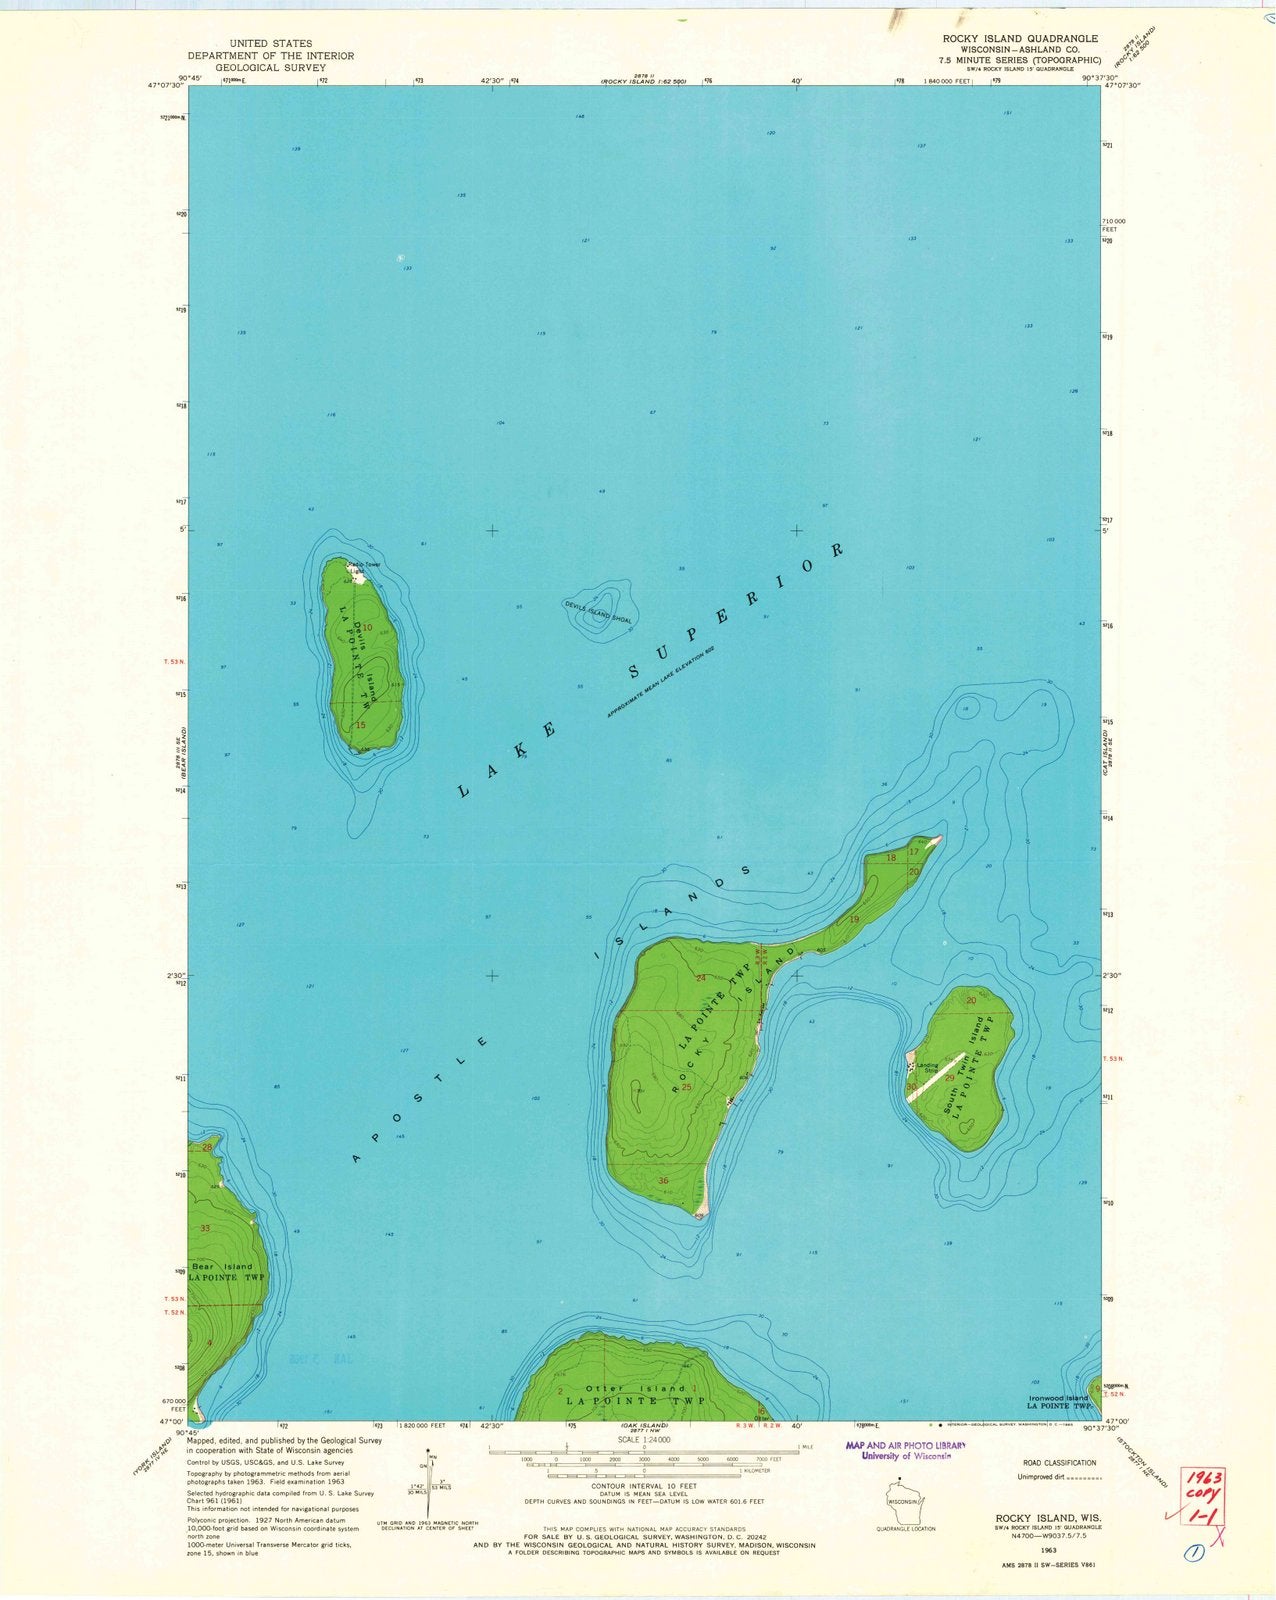 1963 Rocky Island, WI - Wisconsin - USGS Topographic Map